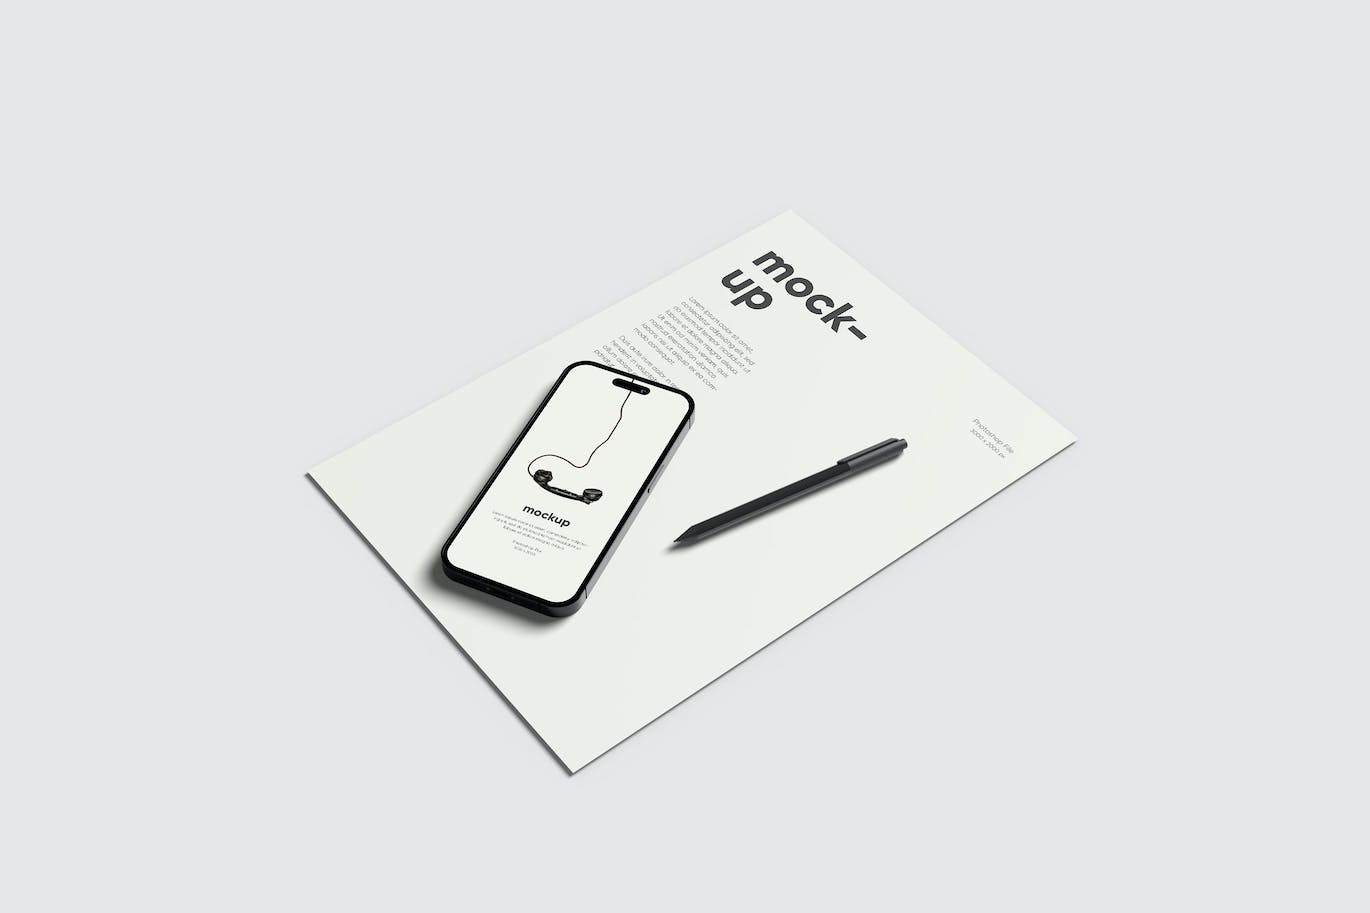 iPhone 14 Pro手机&A4纸张样机图 iPhone 14 With Paper Mockup 样机素材 第1张